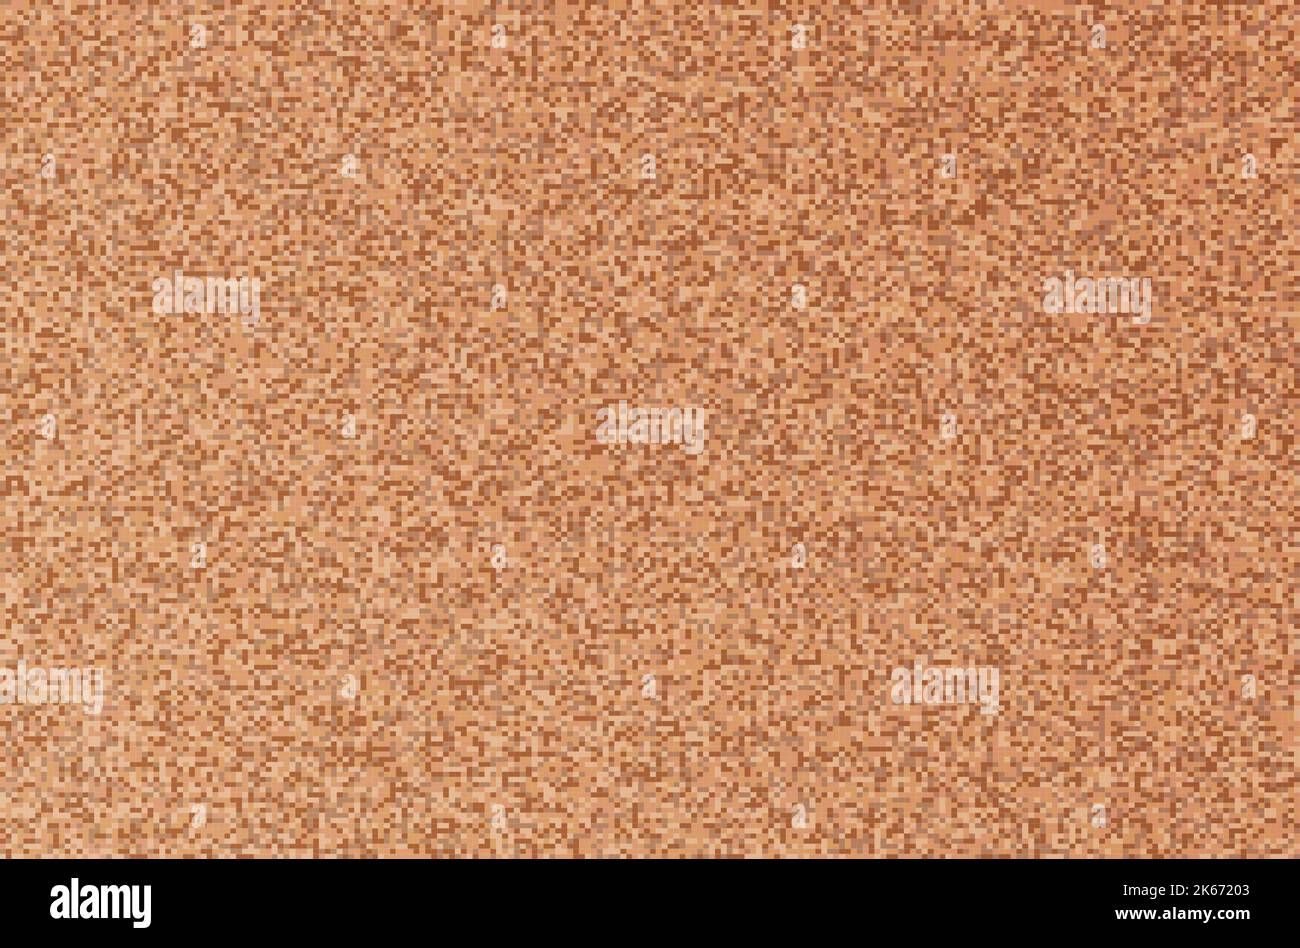 Vektorhintergrund im Pixelstil, stilisierter Corck-Board-Hintergrund. Vektorgrafik. Stock Vektor